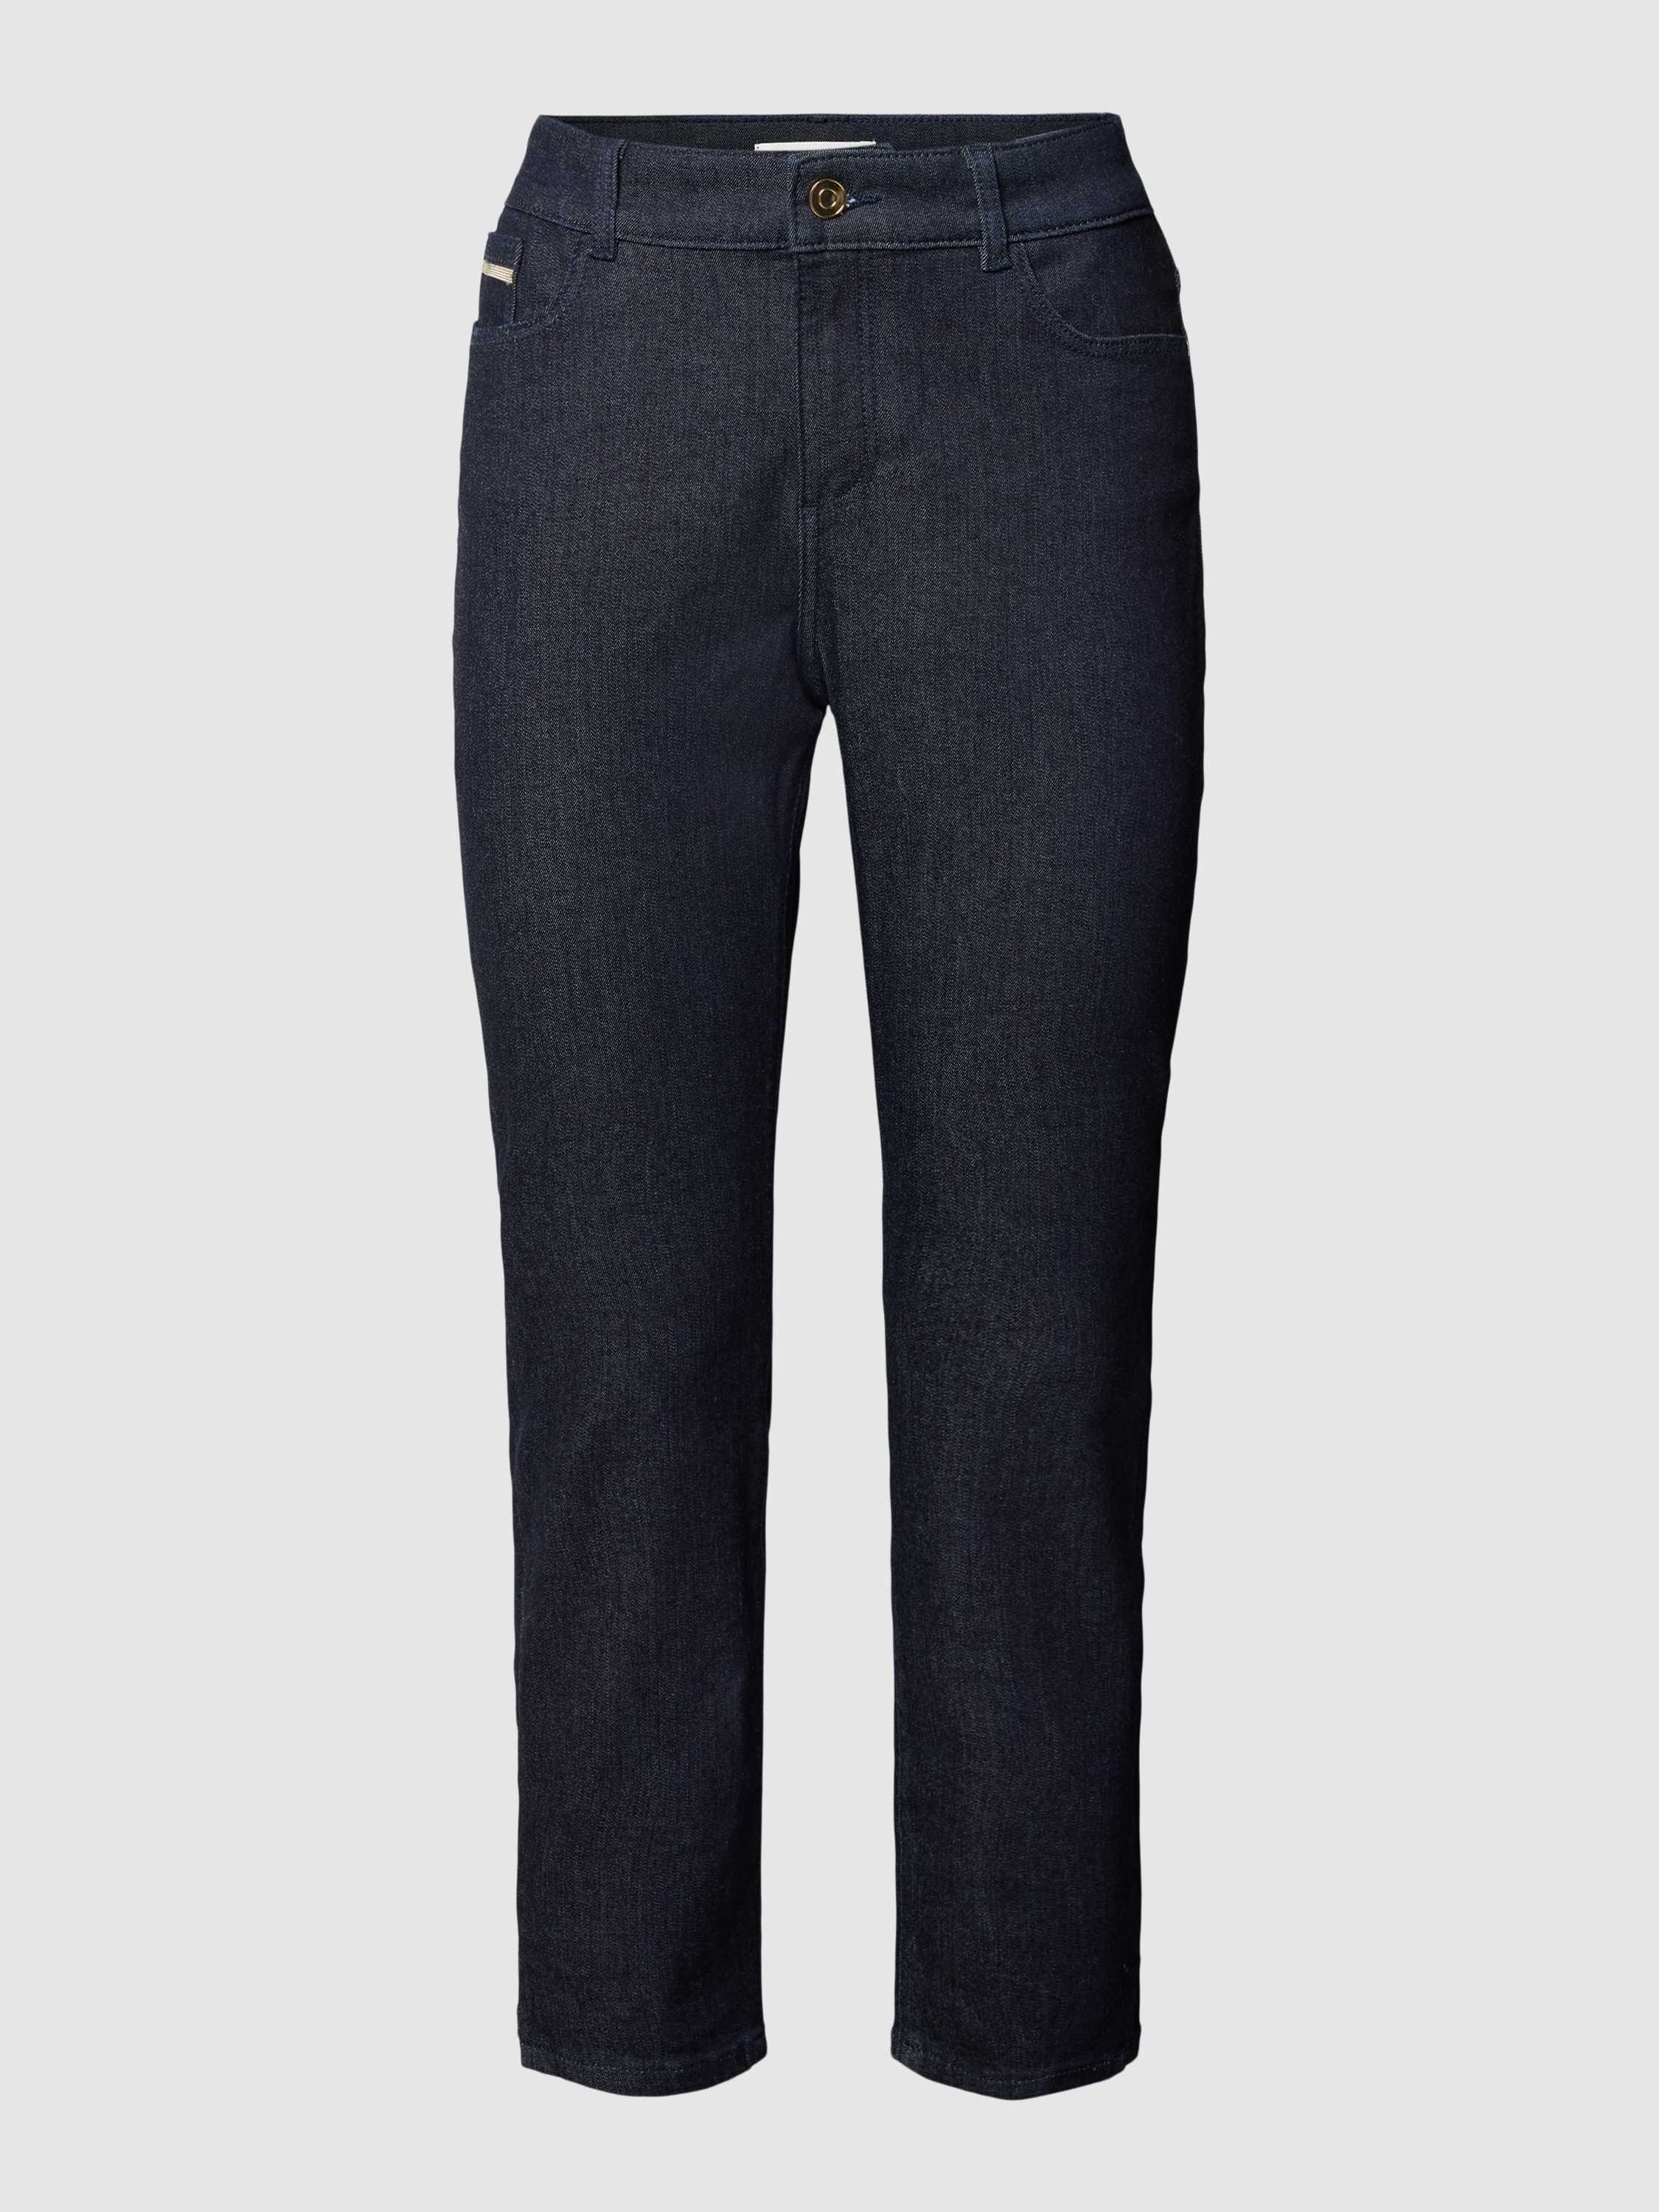 Christian Berg Woman Slim fit jeans in 5-pocketmodel met viscose